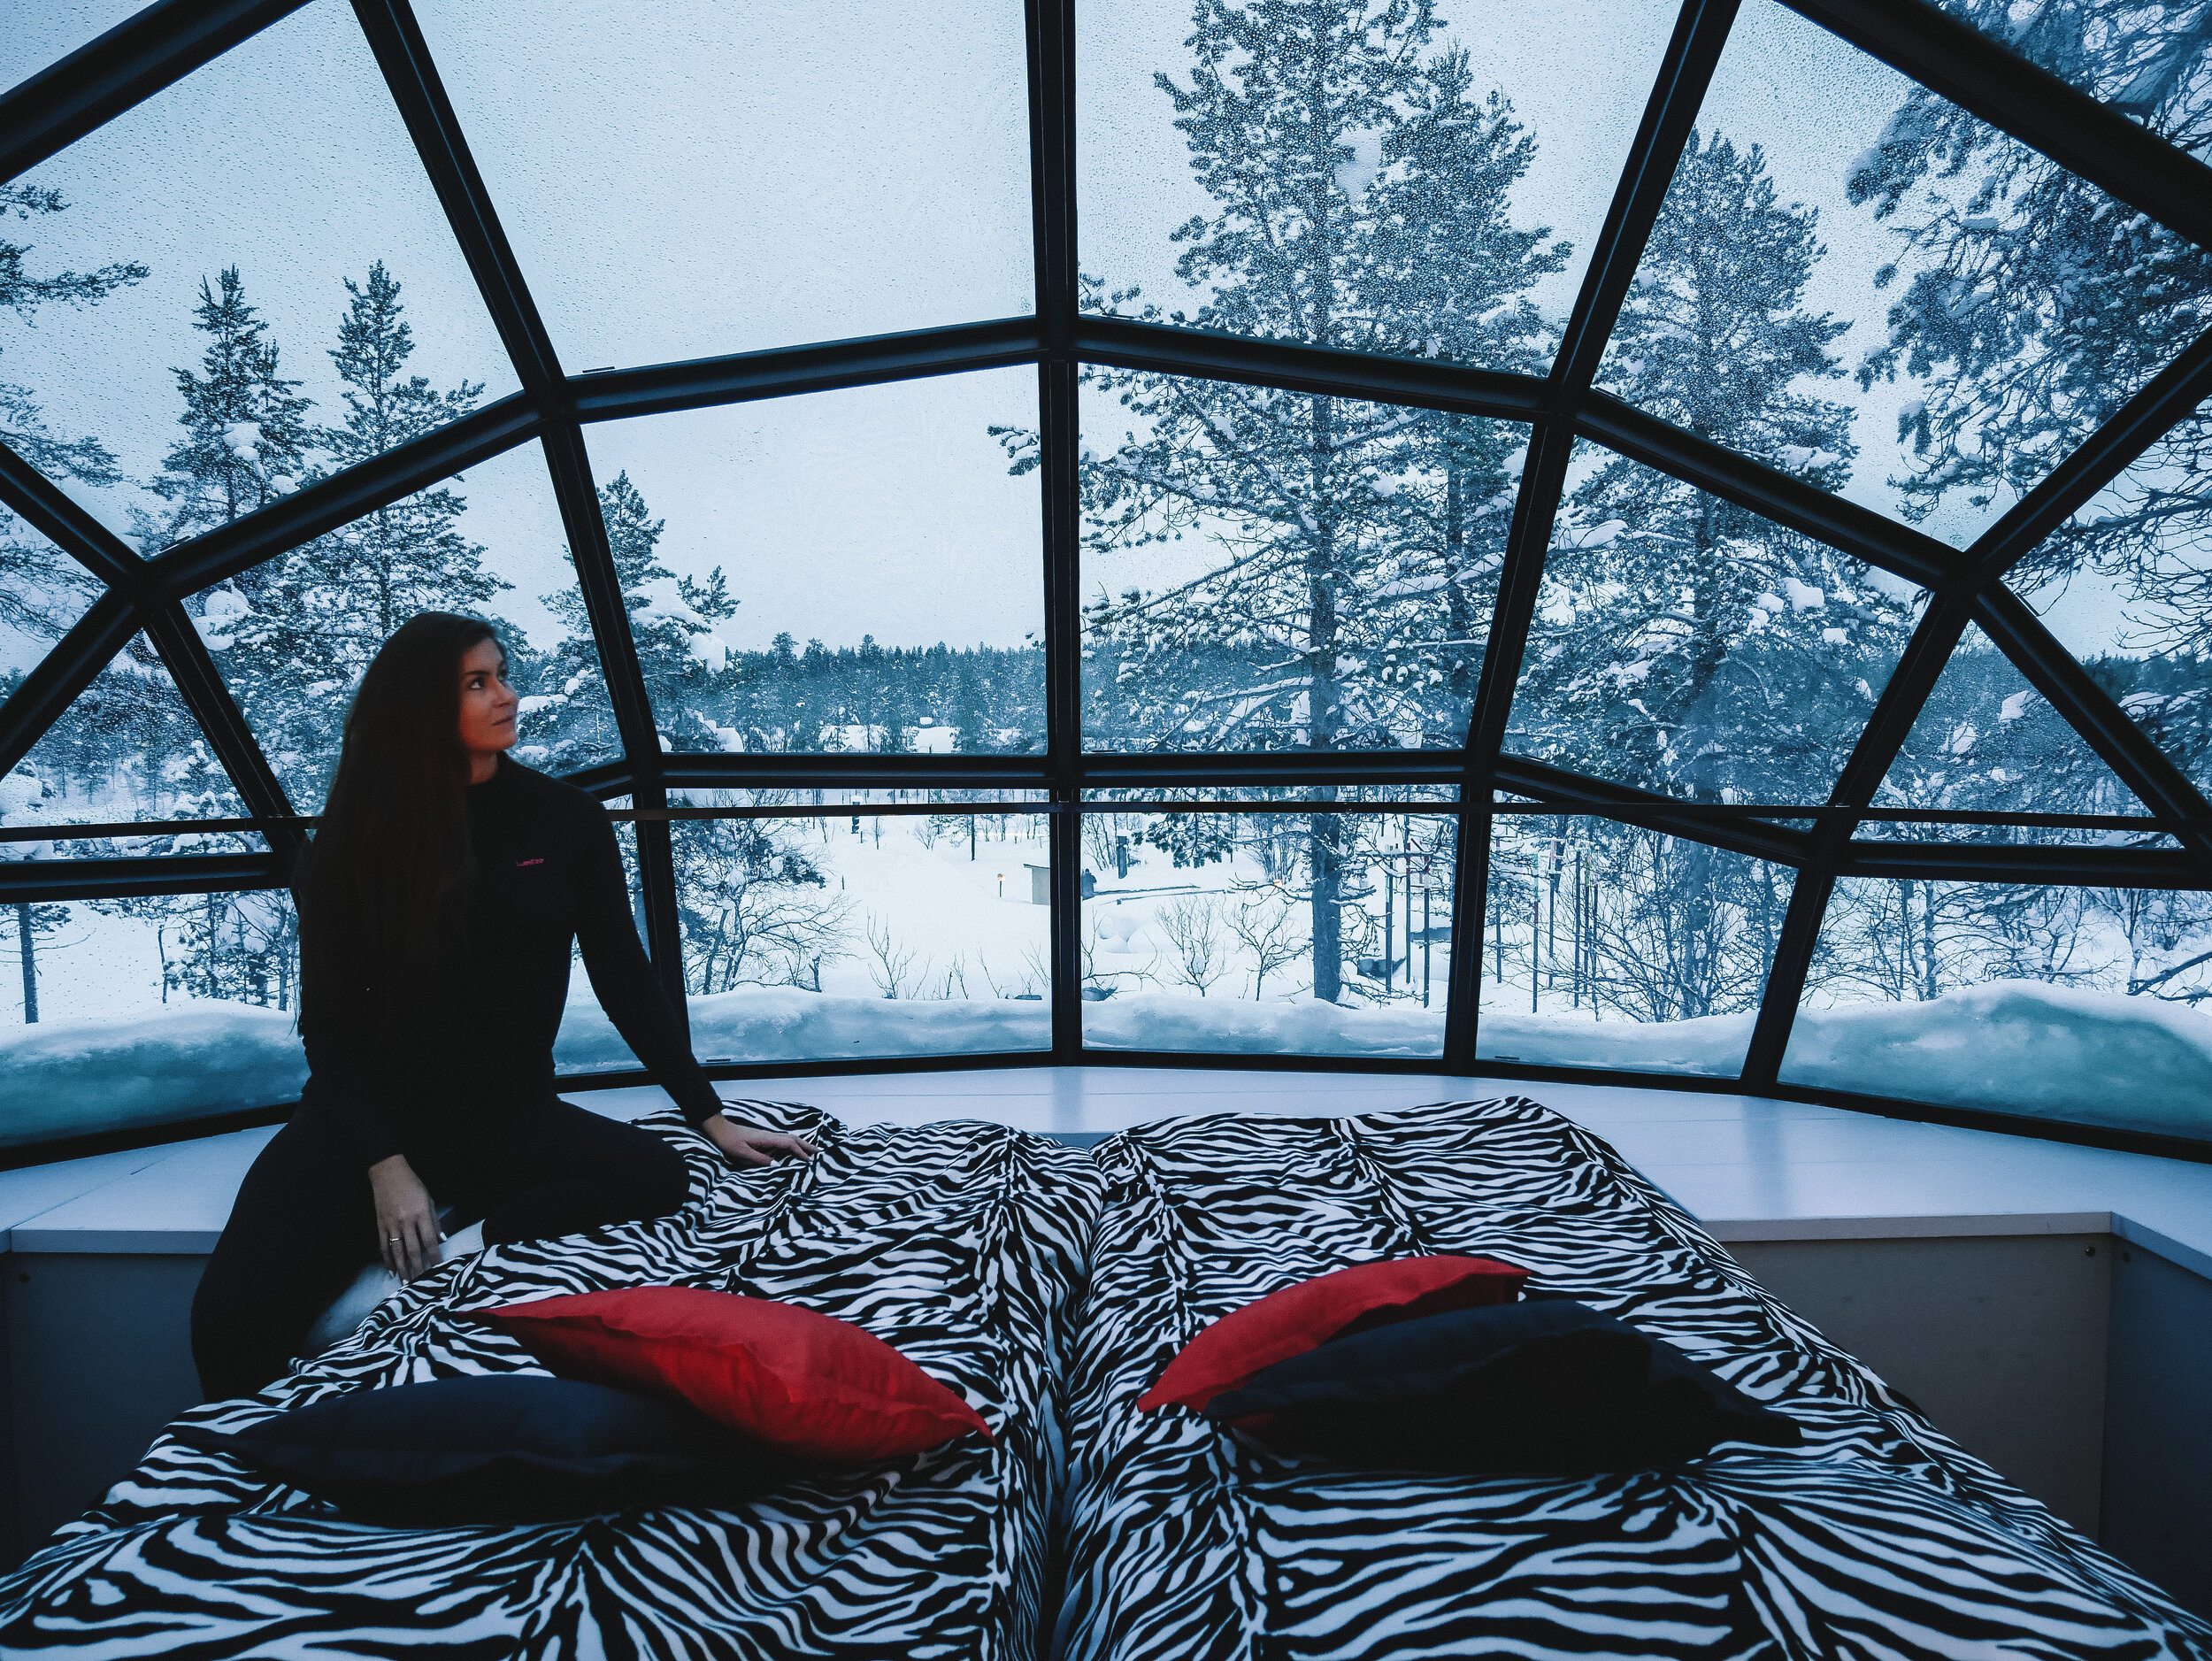 Kakslauttanen Arctic Resort - Glass Igloo - Lapland - Finland